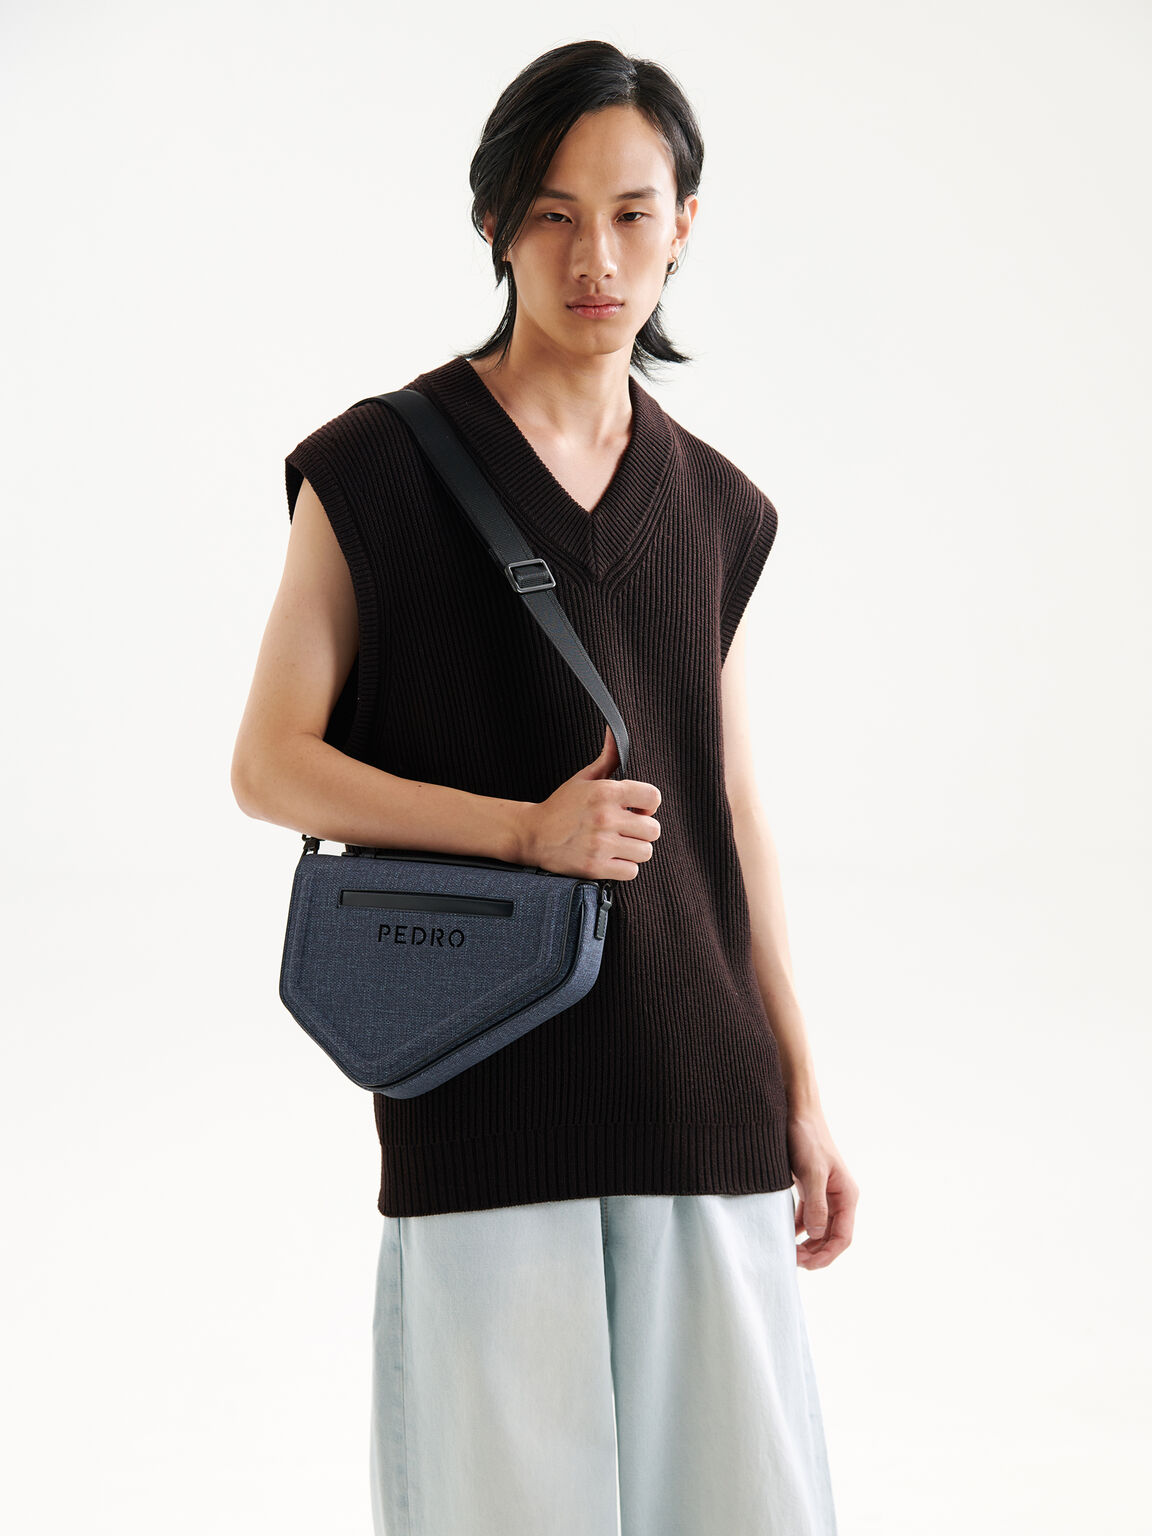 Ohana - Branded SG to Myanmar - Pedro (New Arrival‼️) Casual Nylon Sling Bag  Style: PM2-26320090 Price: 89,000 kyats #pedromen #newarrival #casual # slingbag